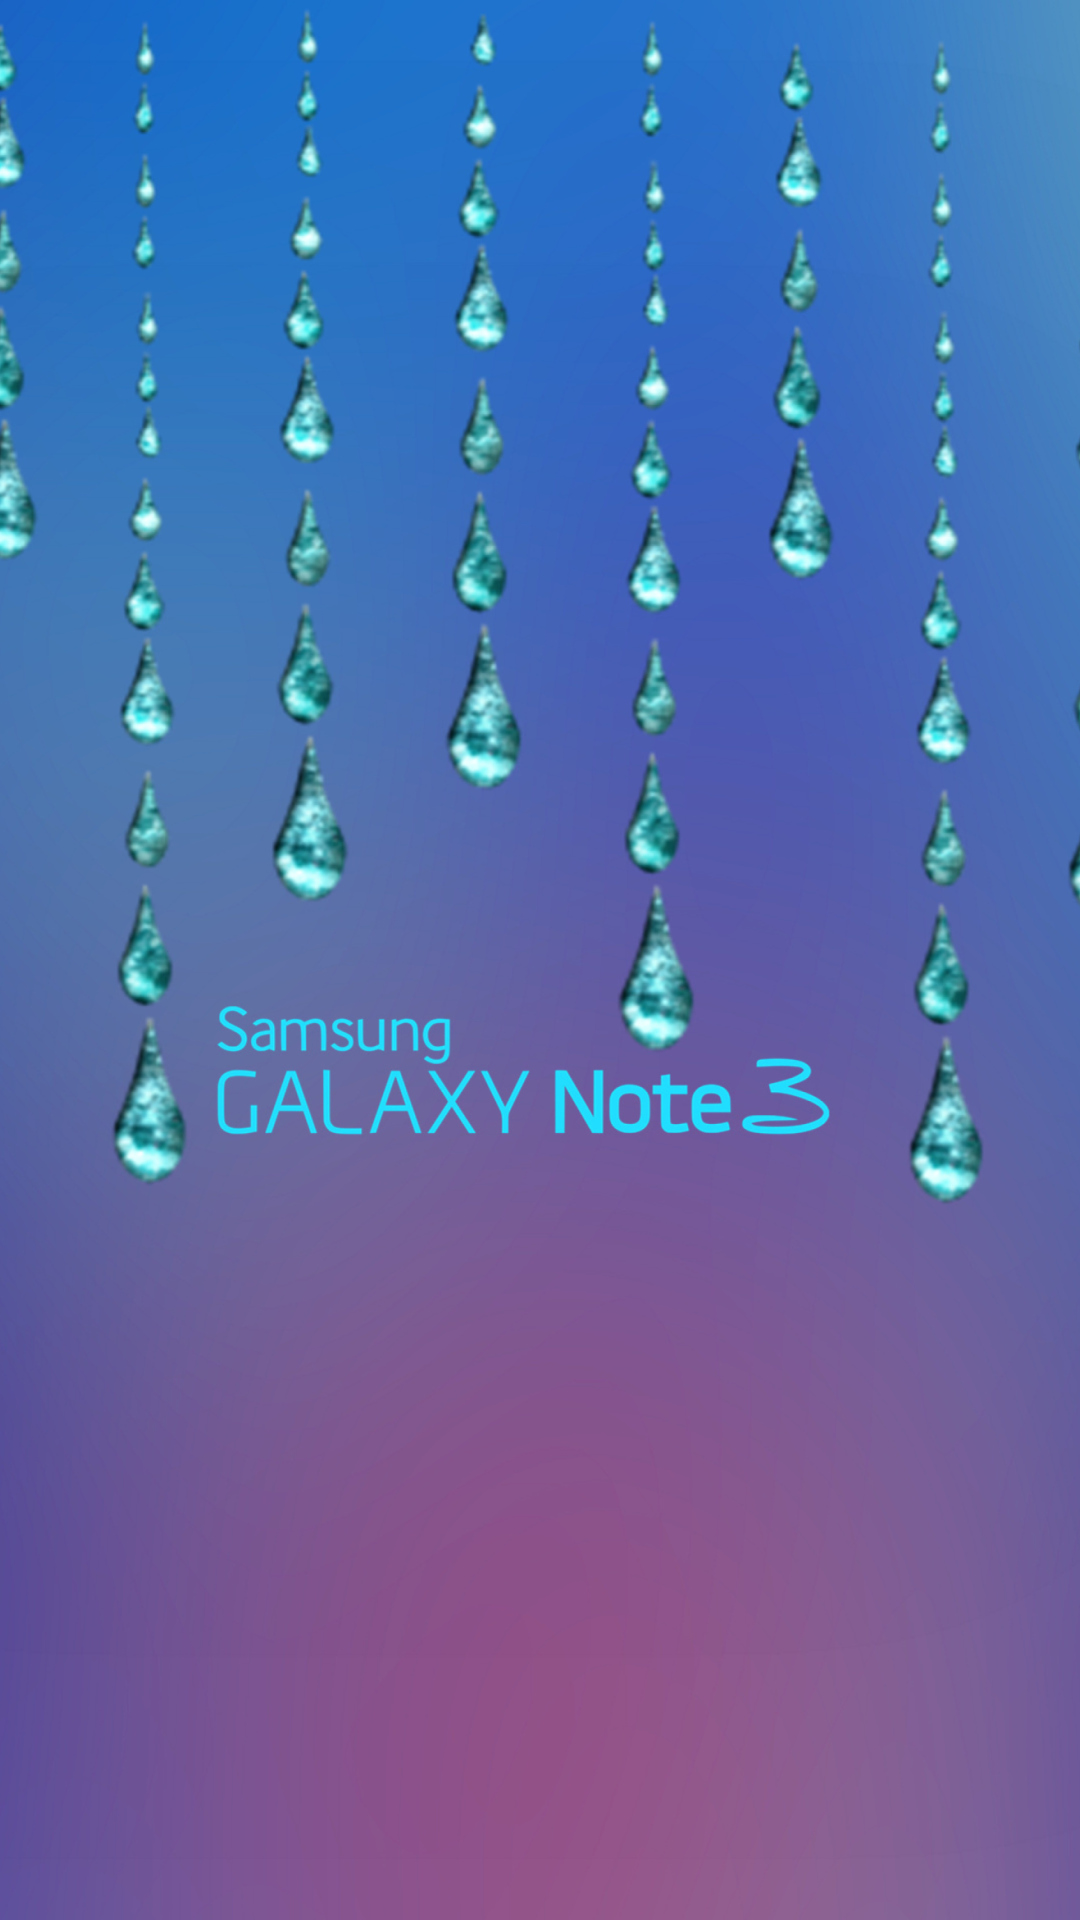 Galaxy Note 3 wallpaper 1080x1920